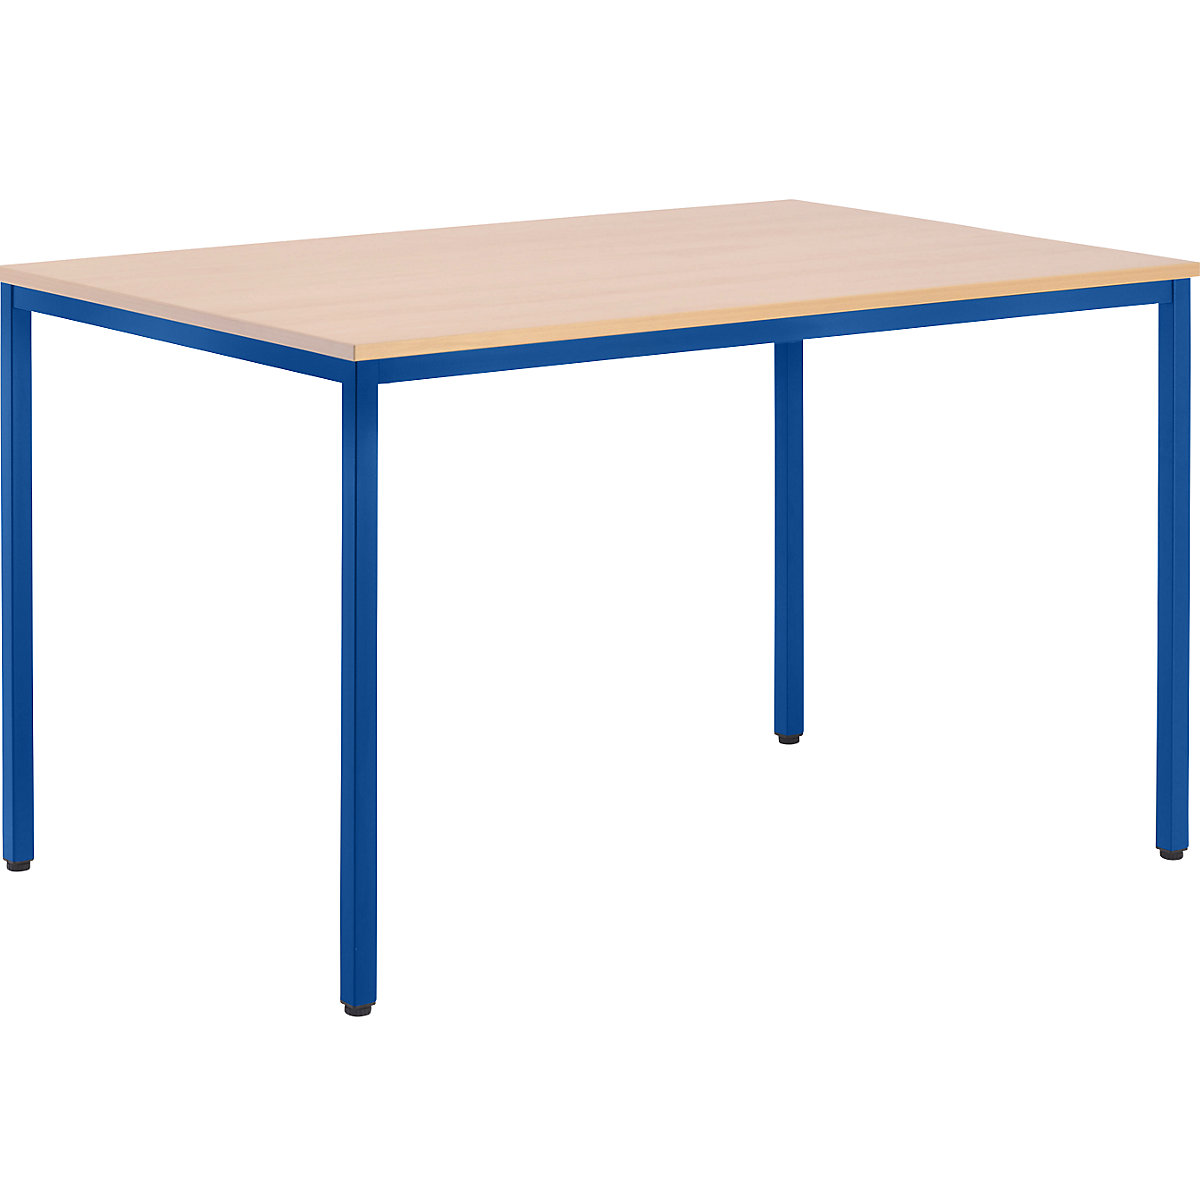 Multifunctionele tafel – eurokraft basic, h x b x d = 720 x 1200 x 800 mm, blad beukenhoutdecor, frame gentiaanblauw